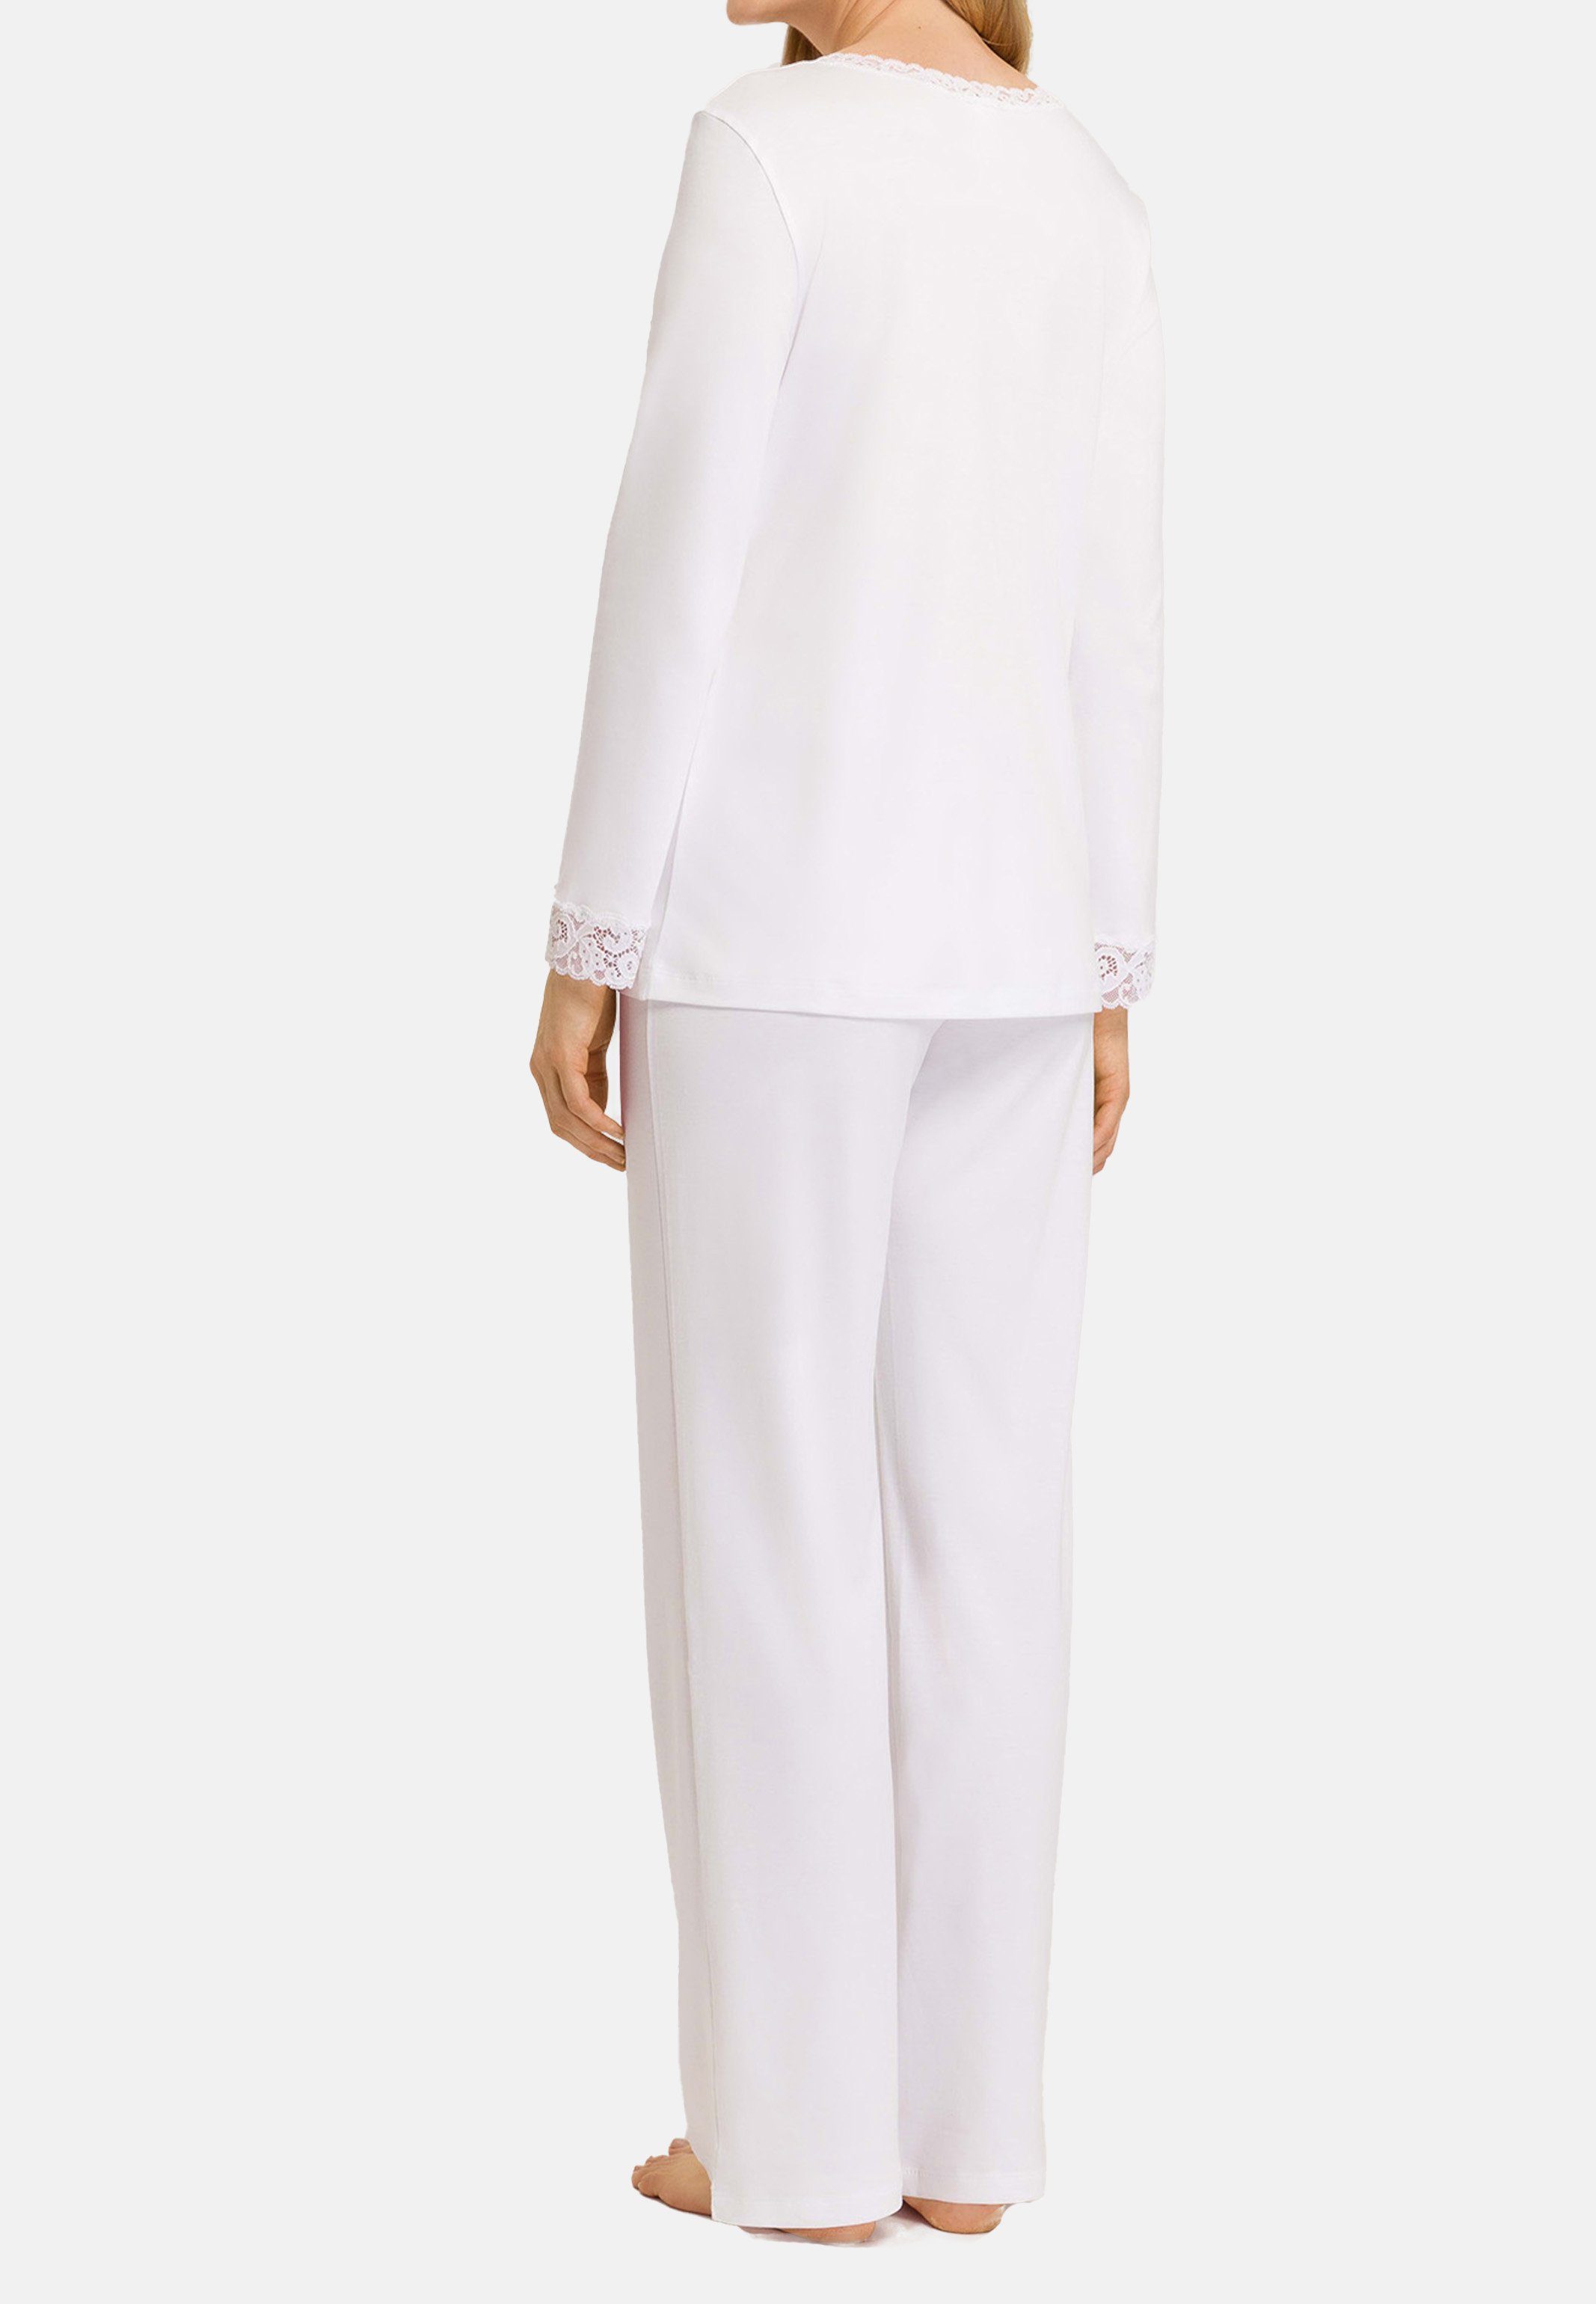 2 aus Pyjama und Langarm Schlafanzug - Set Baumwolle Shirt Moments langer White Hose - tlg) (Set, Hanro